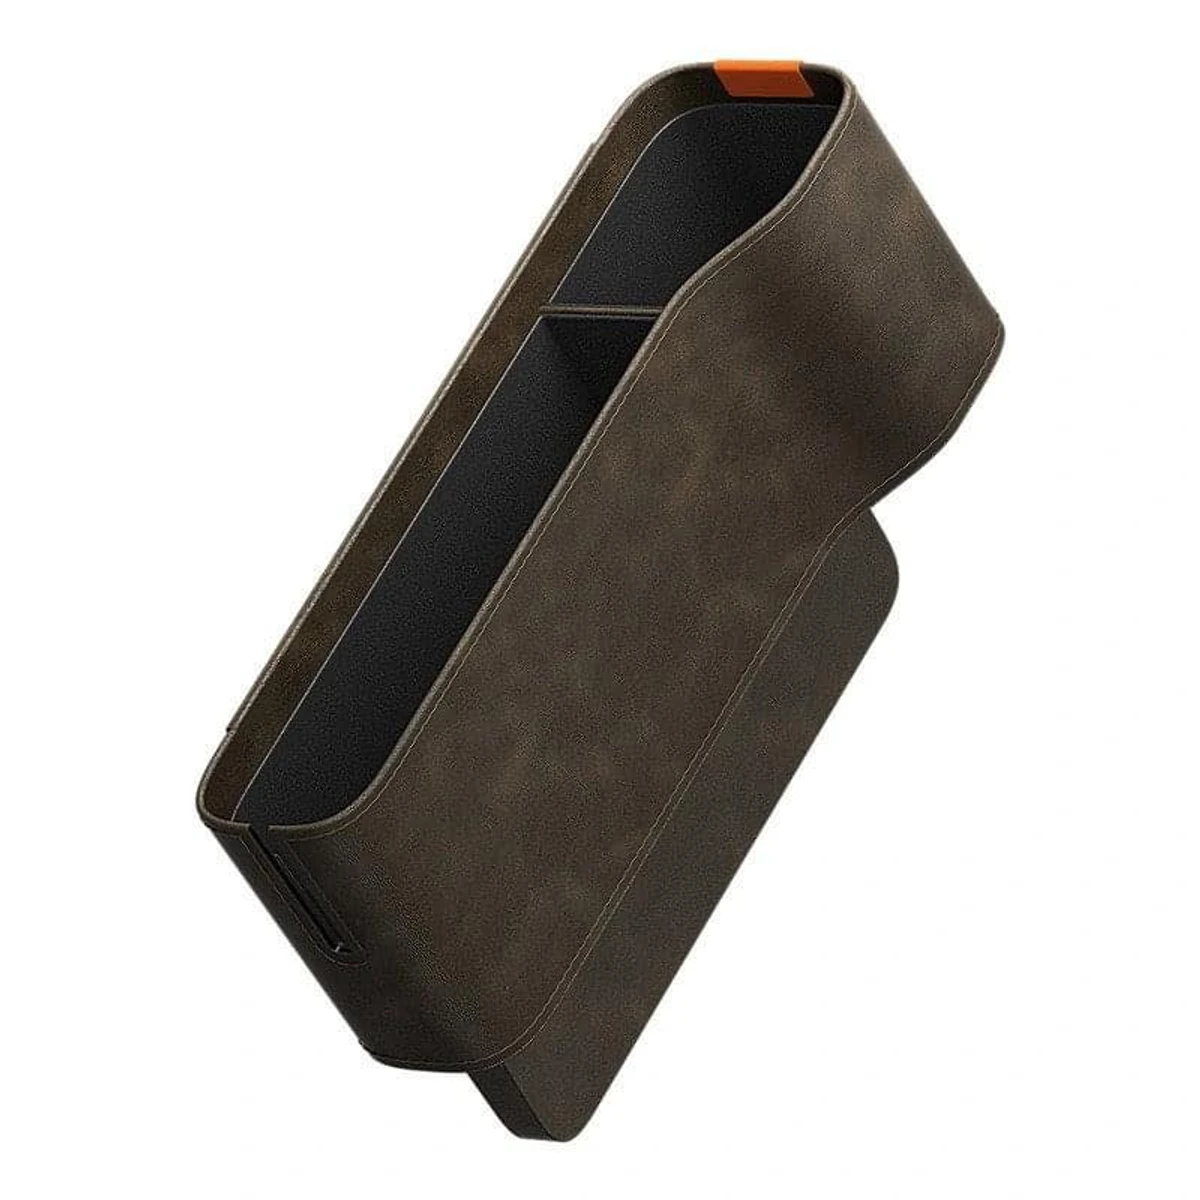 Baseus Car Console Crevice Side Storage Organizer Box PU Leather Interior Accessories